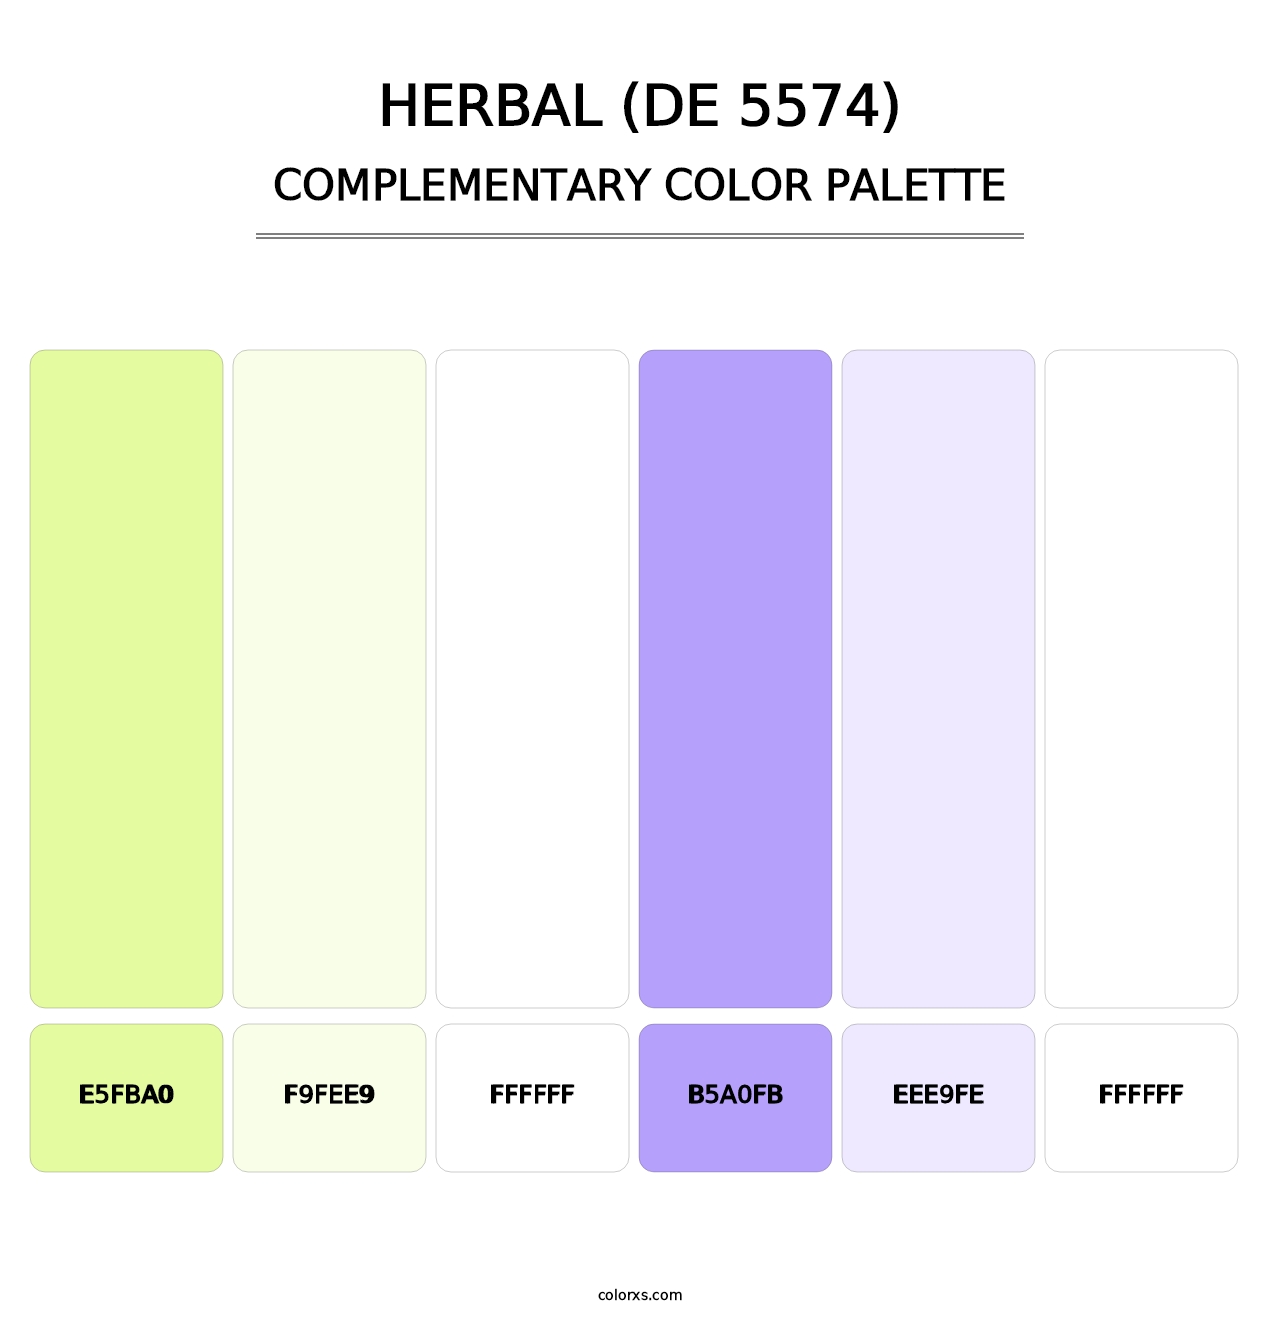 Herbal (DE 5574) - Complementary Color Palette